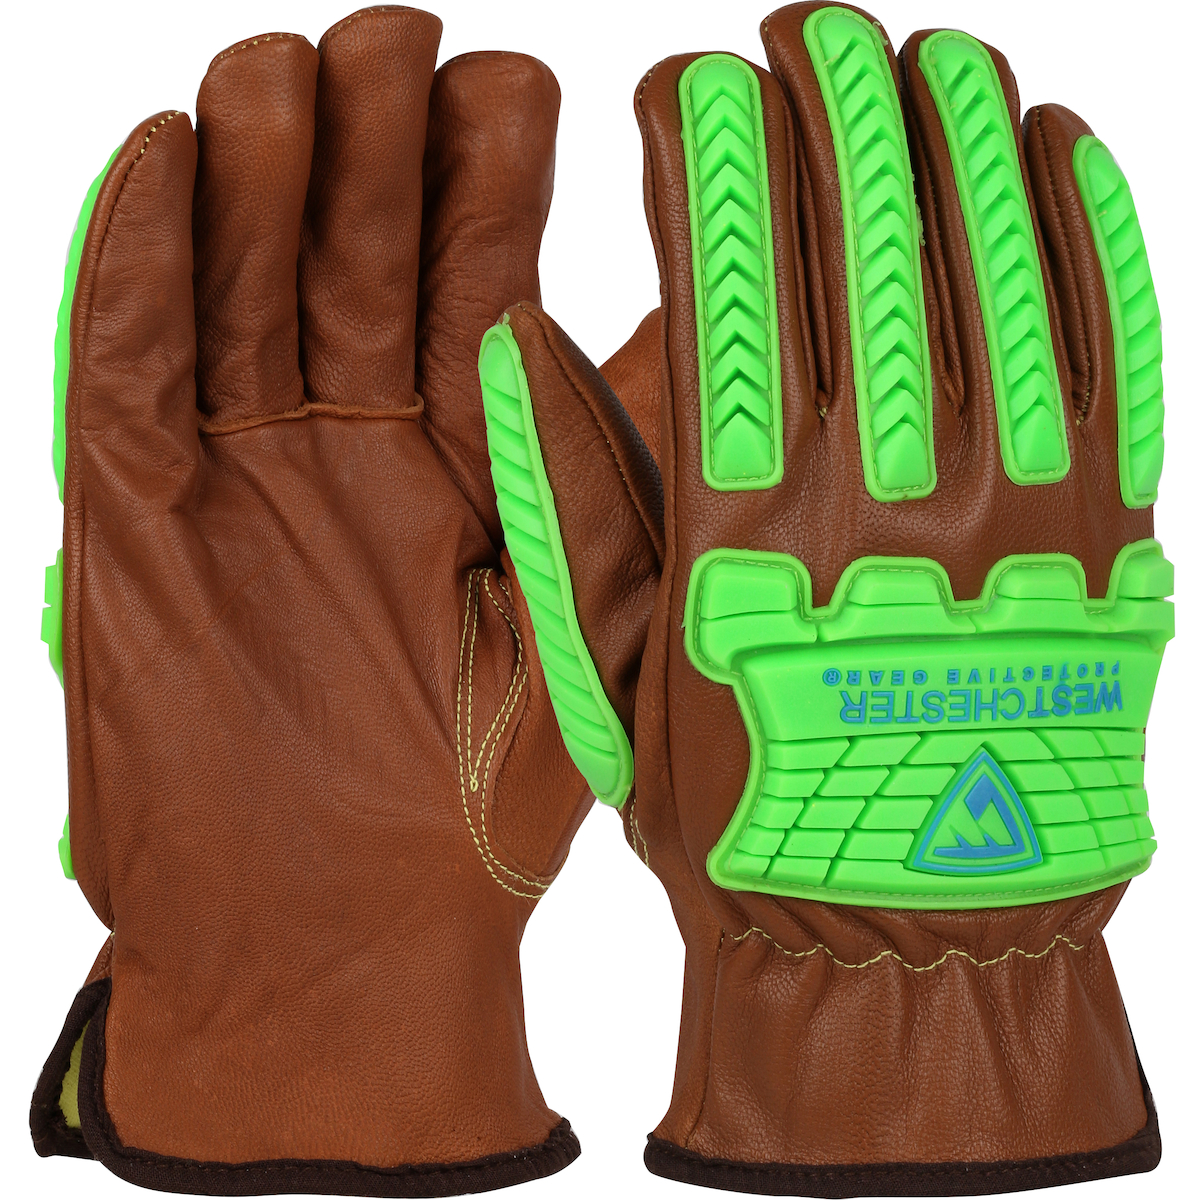 KS993KOAB PIP® Top Grain Goatskin Impact Leather Drivers Glove with Para-Aramid Lining and Keystone Thumb feature Oil Armor™